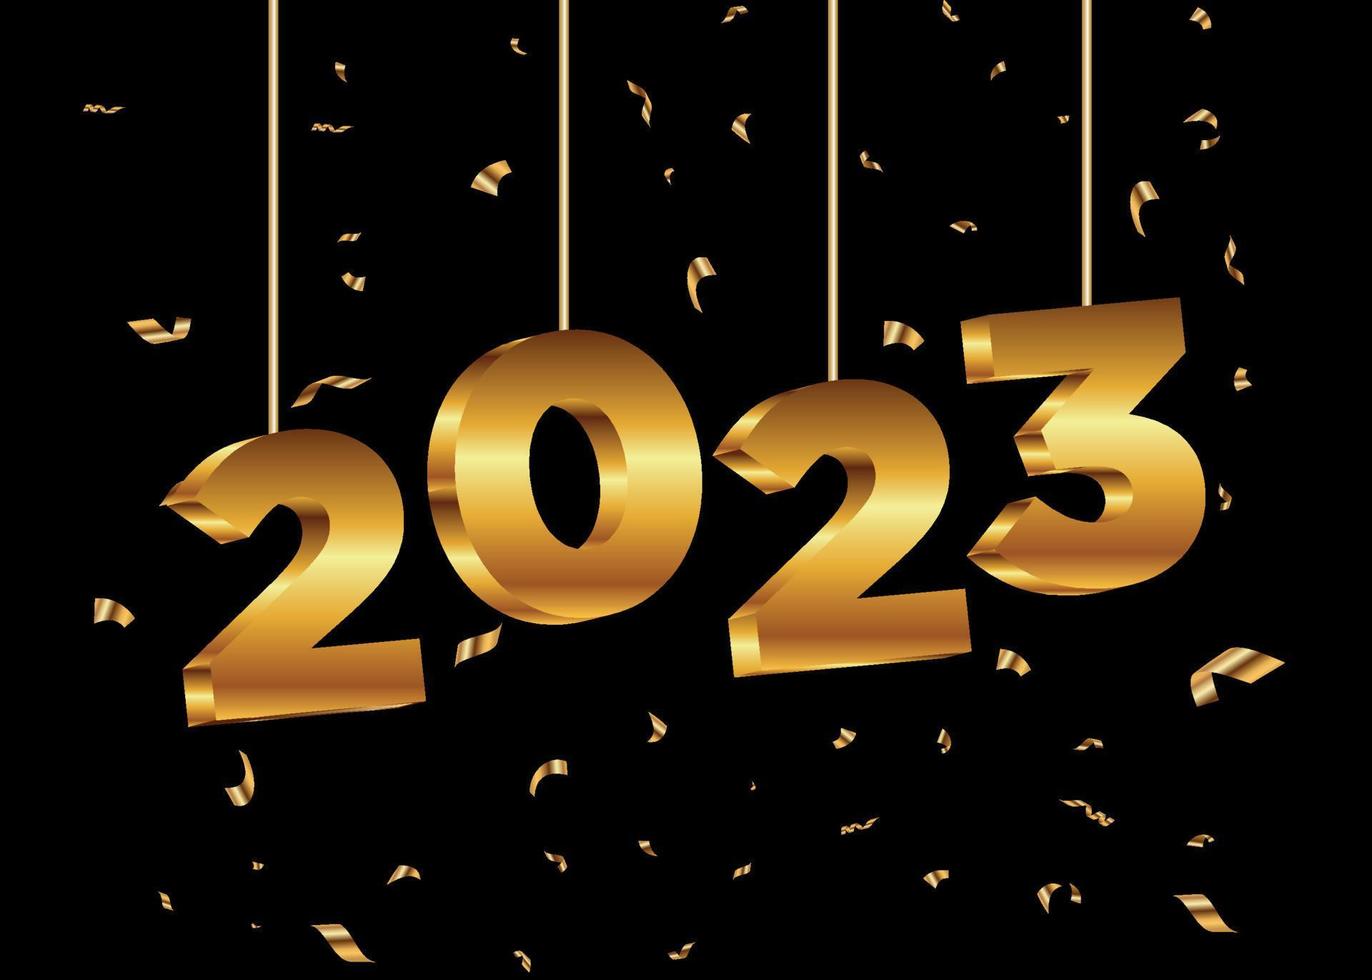 2023 New Year Background Design.2023 Text Design Vector